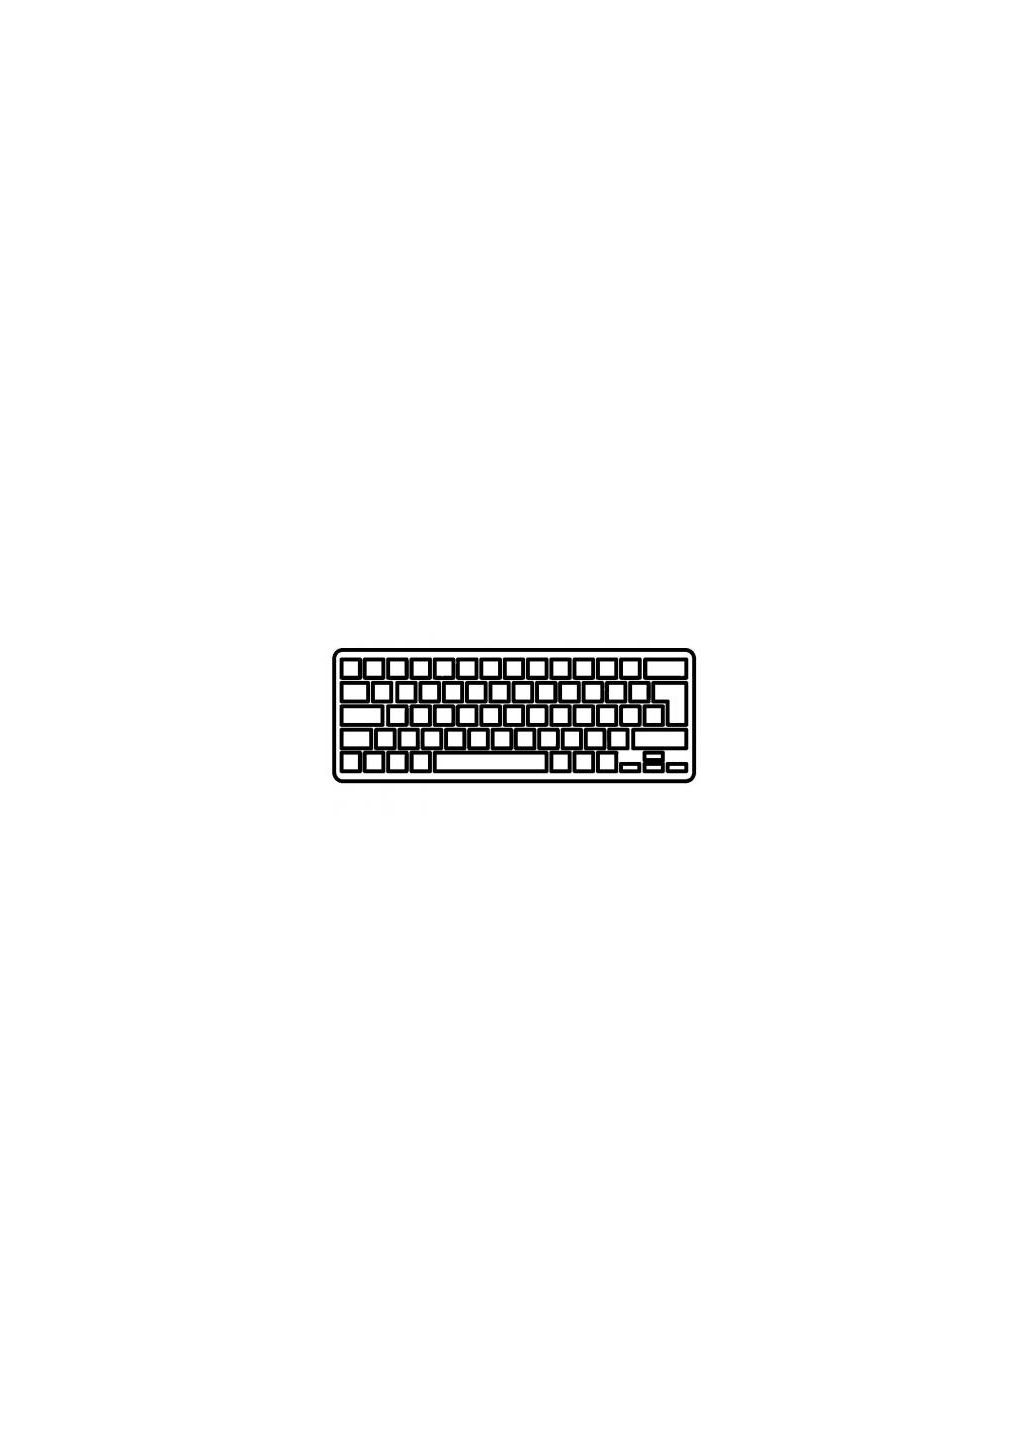 Клавиатура ноутбука (A43130) Asus x540 белая без рамки ru/us (276706943)